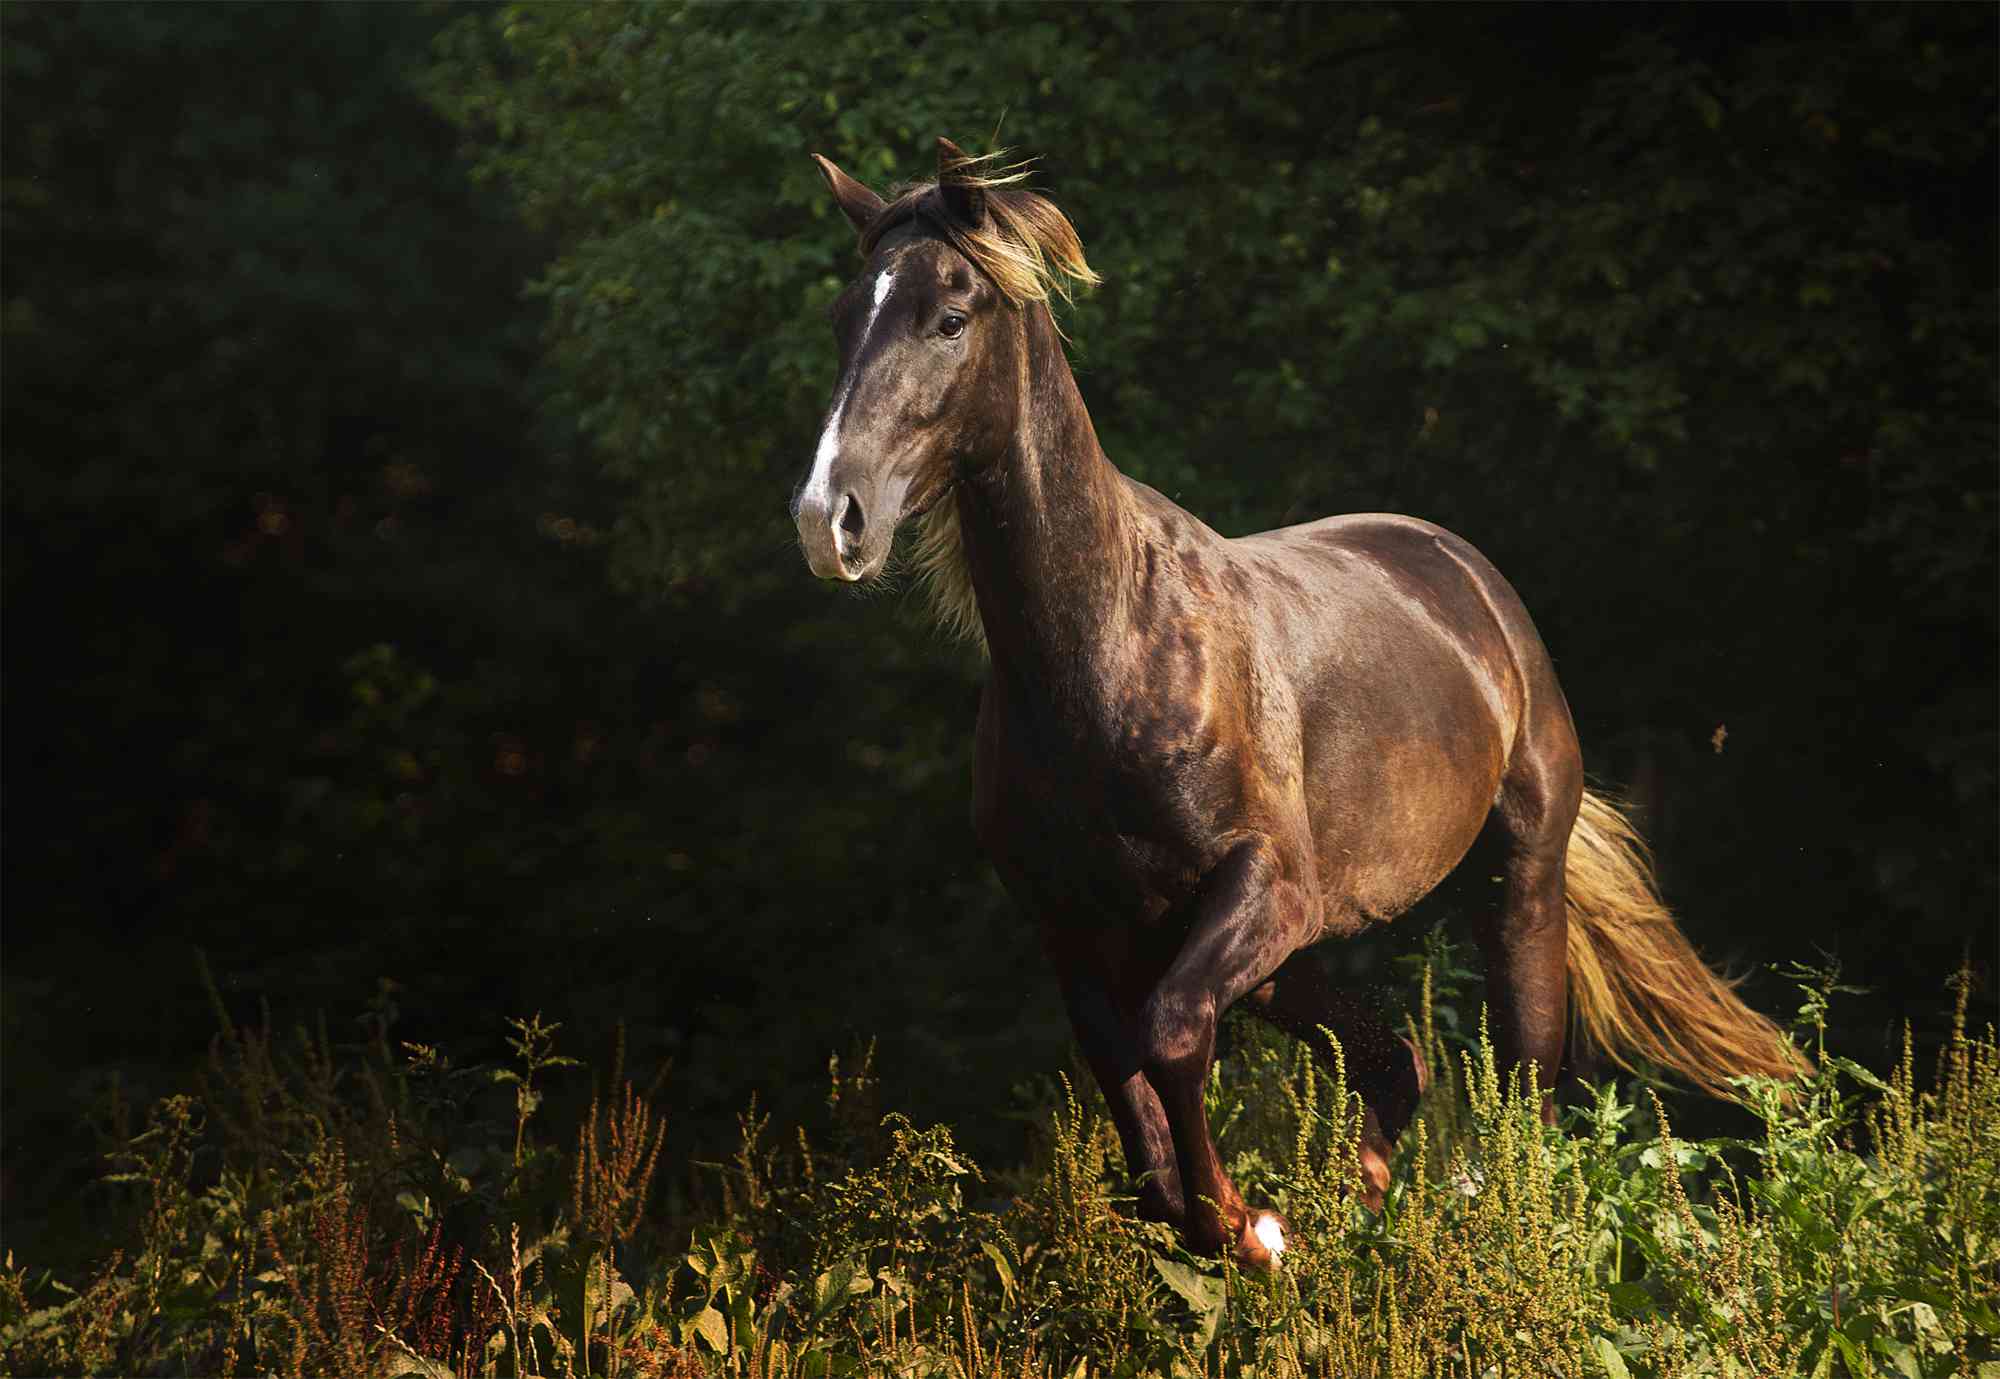 Kentucky mountain saddle horse running in a field